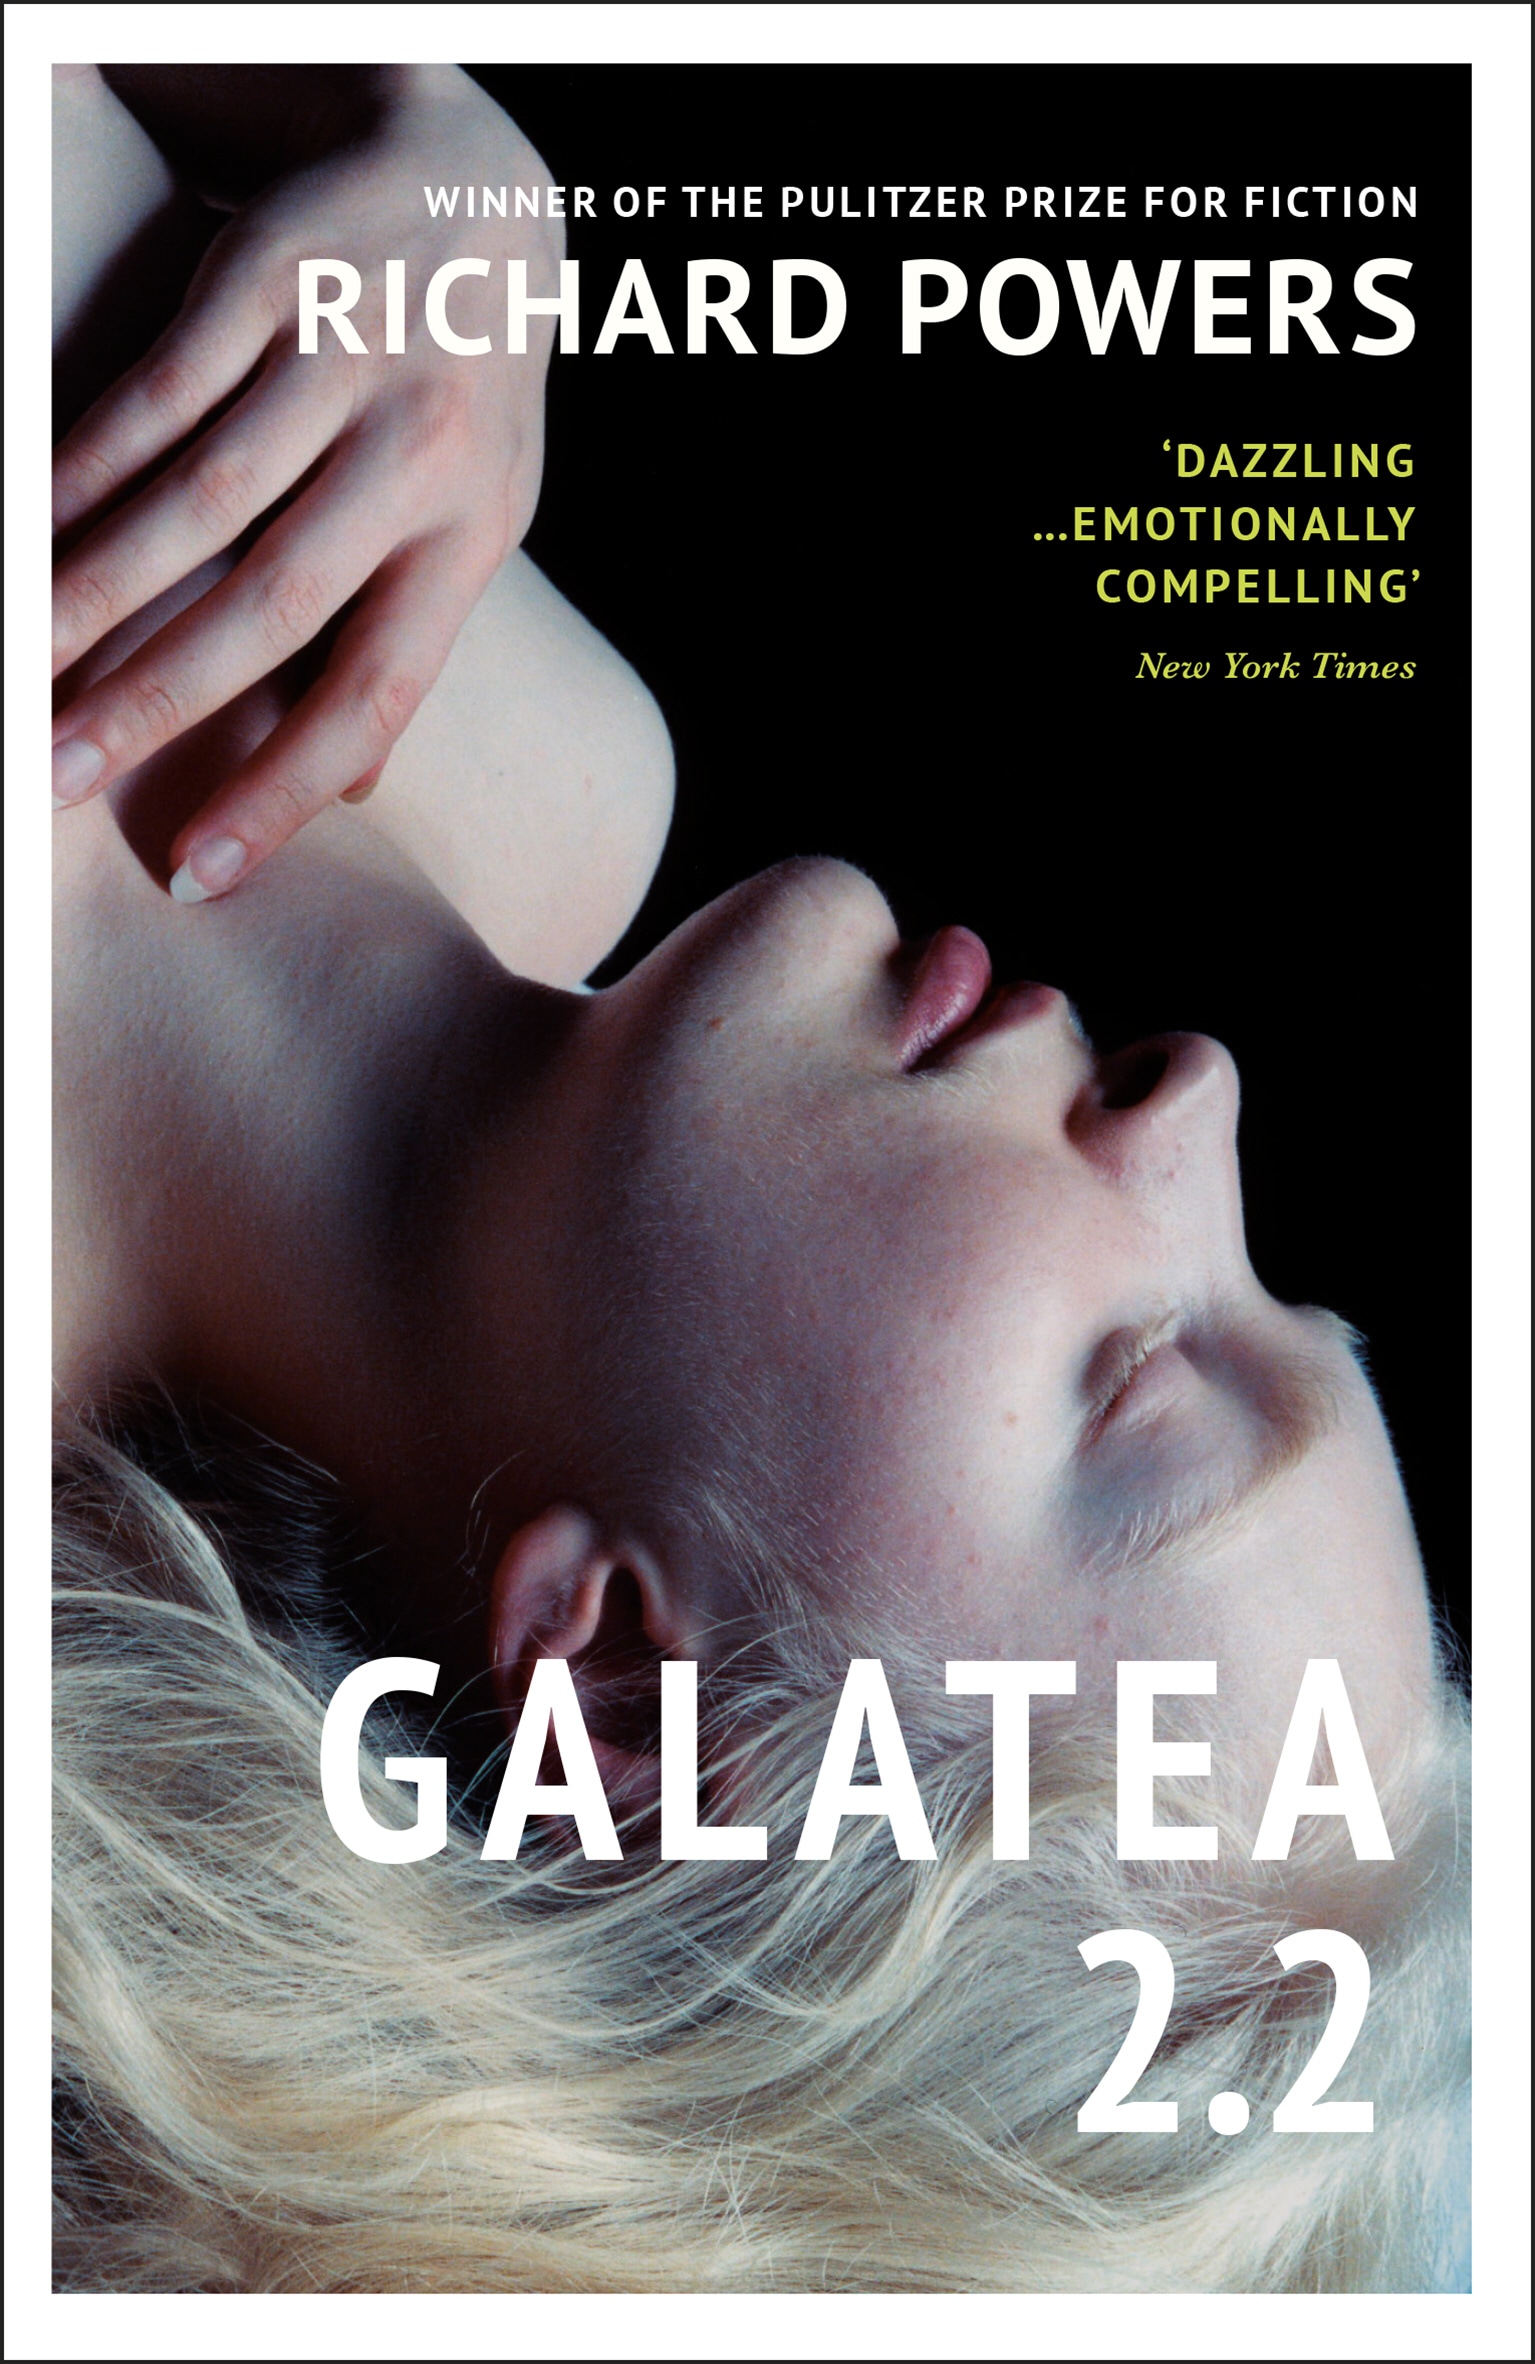 Book “Galatea 2.2” by Richard Powers — November 7, 2019